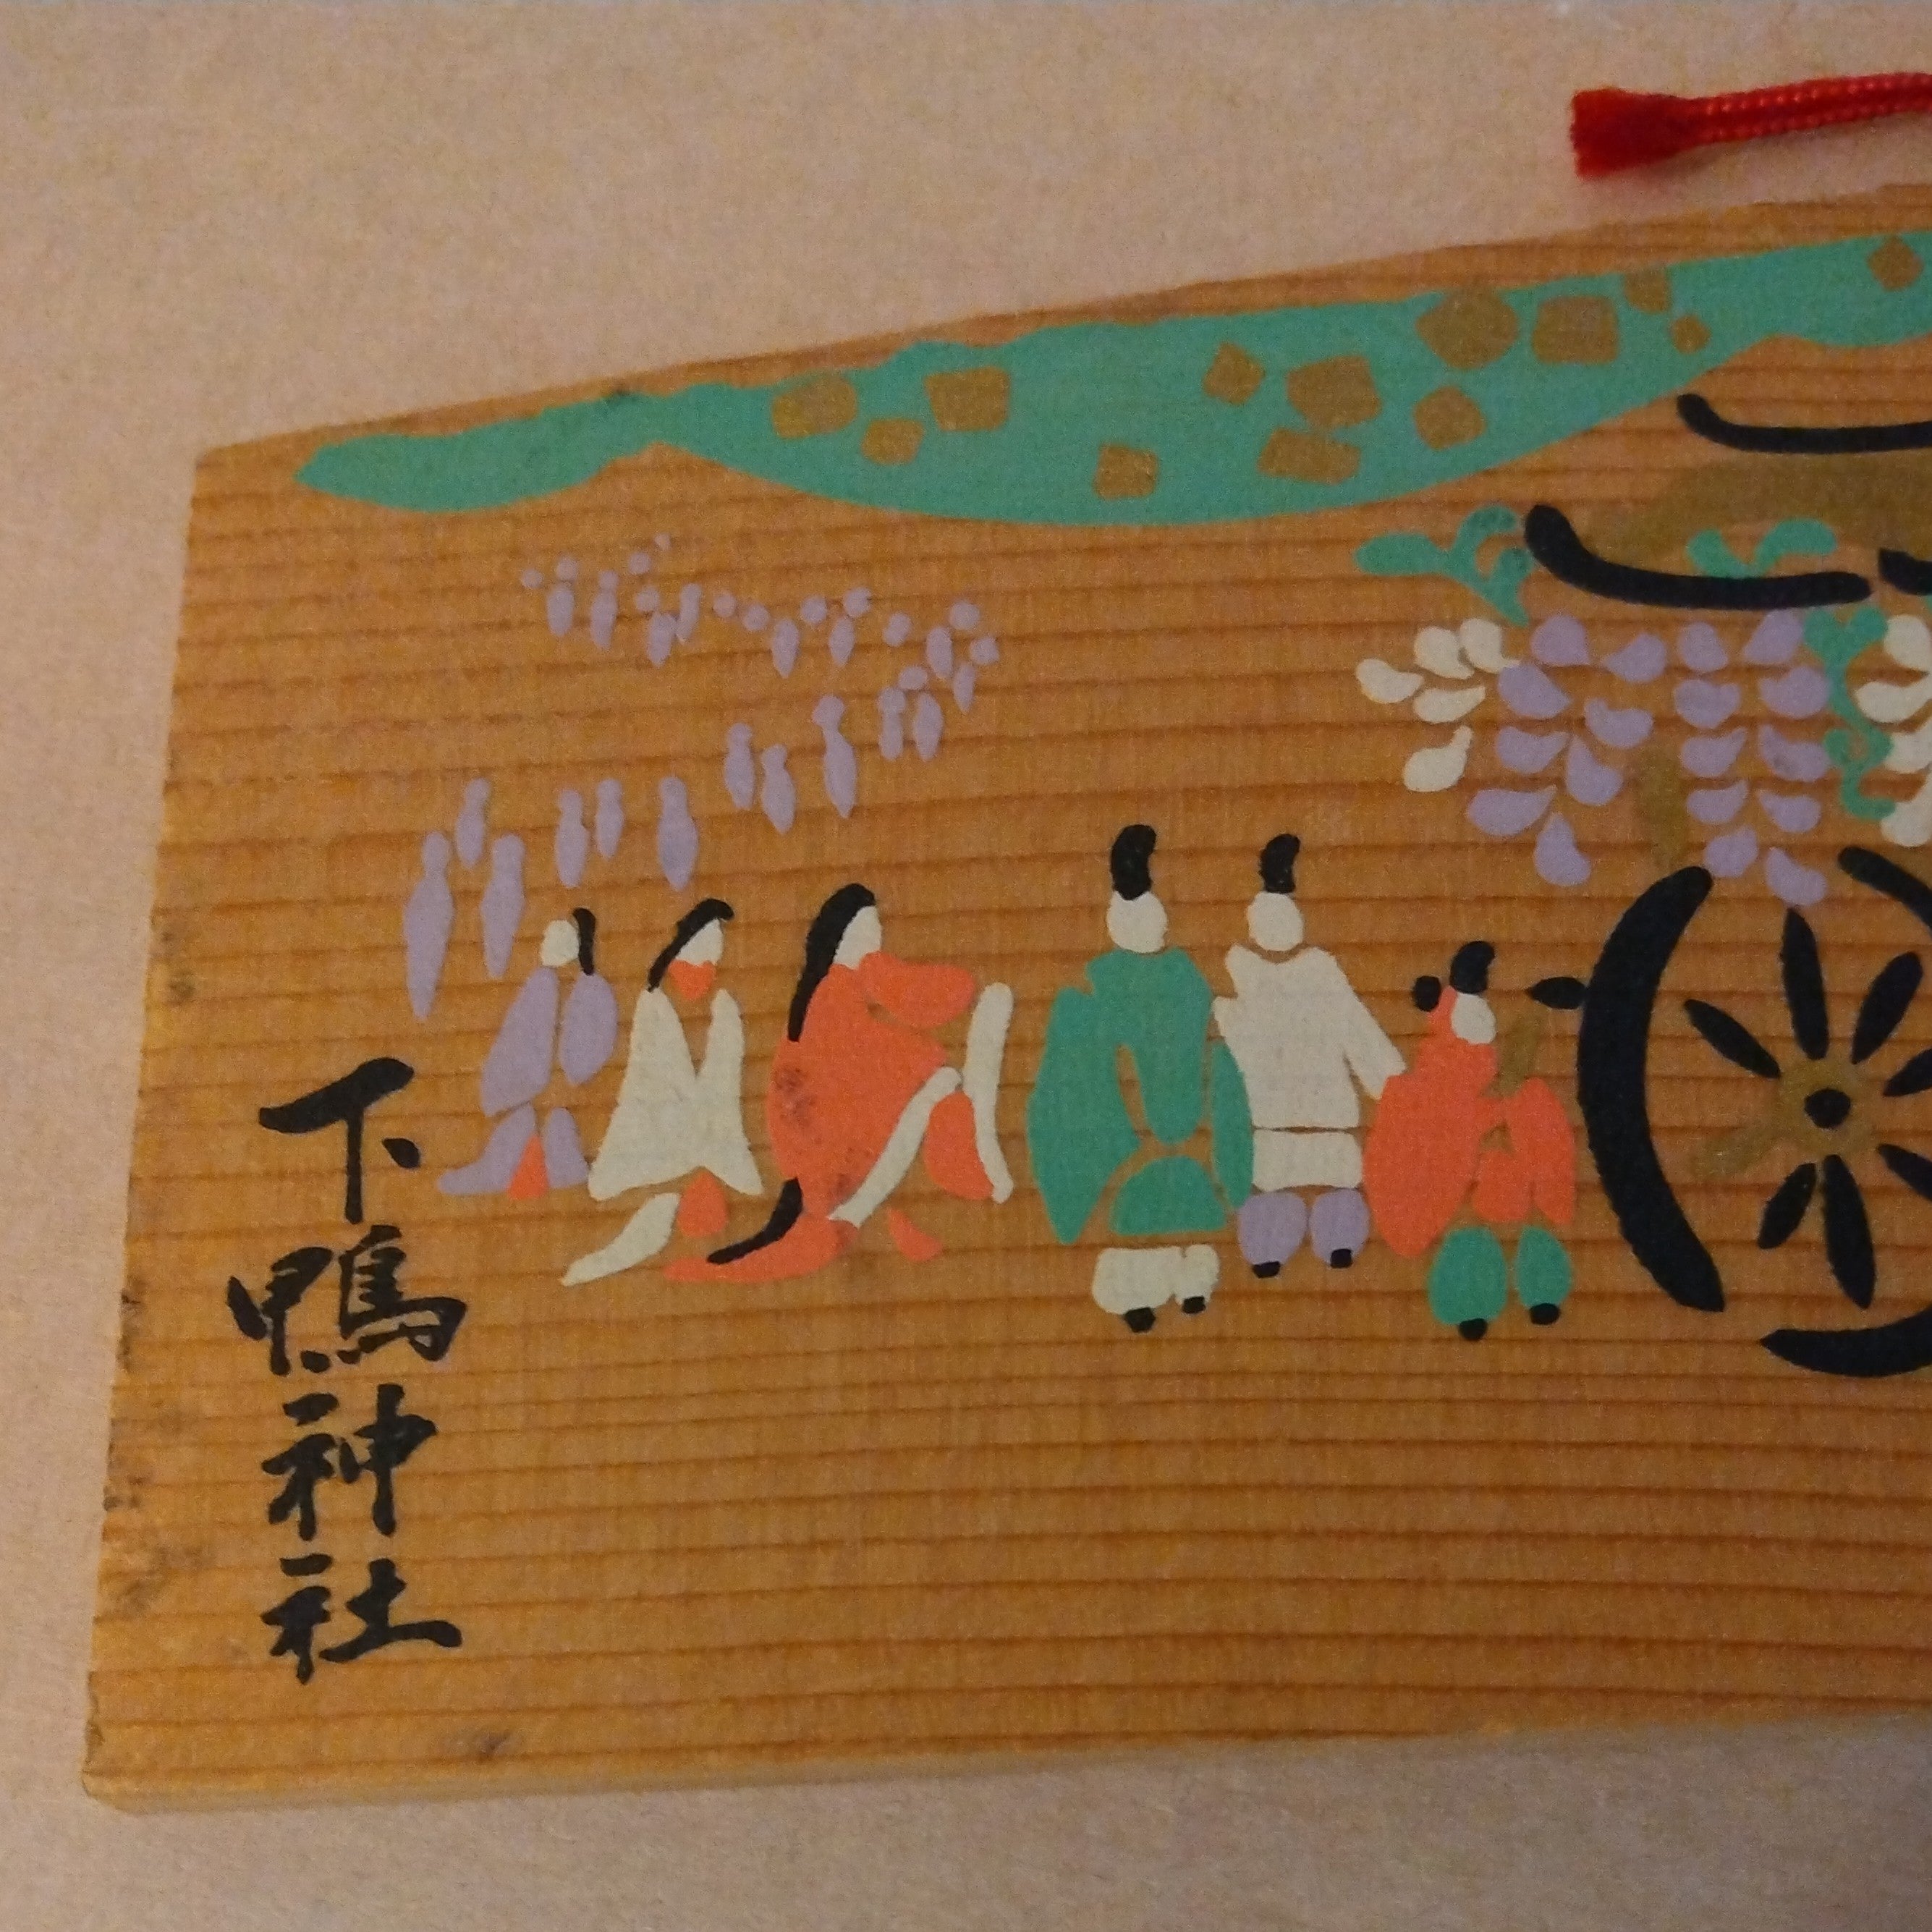 Ema, Wooden Votive Placque from Shimogamo Shrine, Kyoto; Thiel Collection